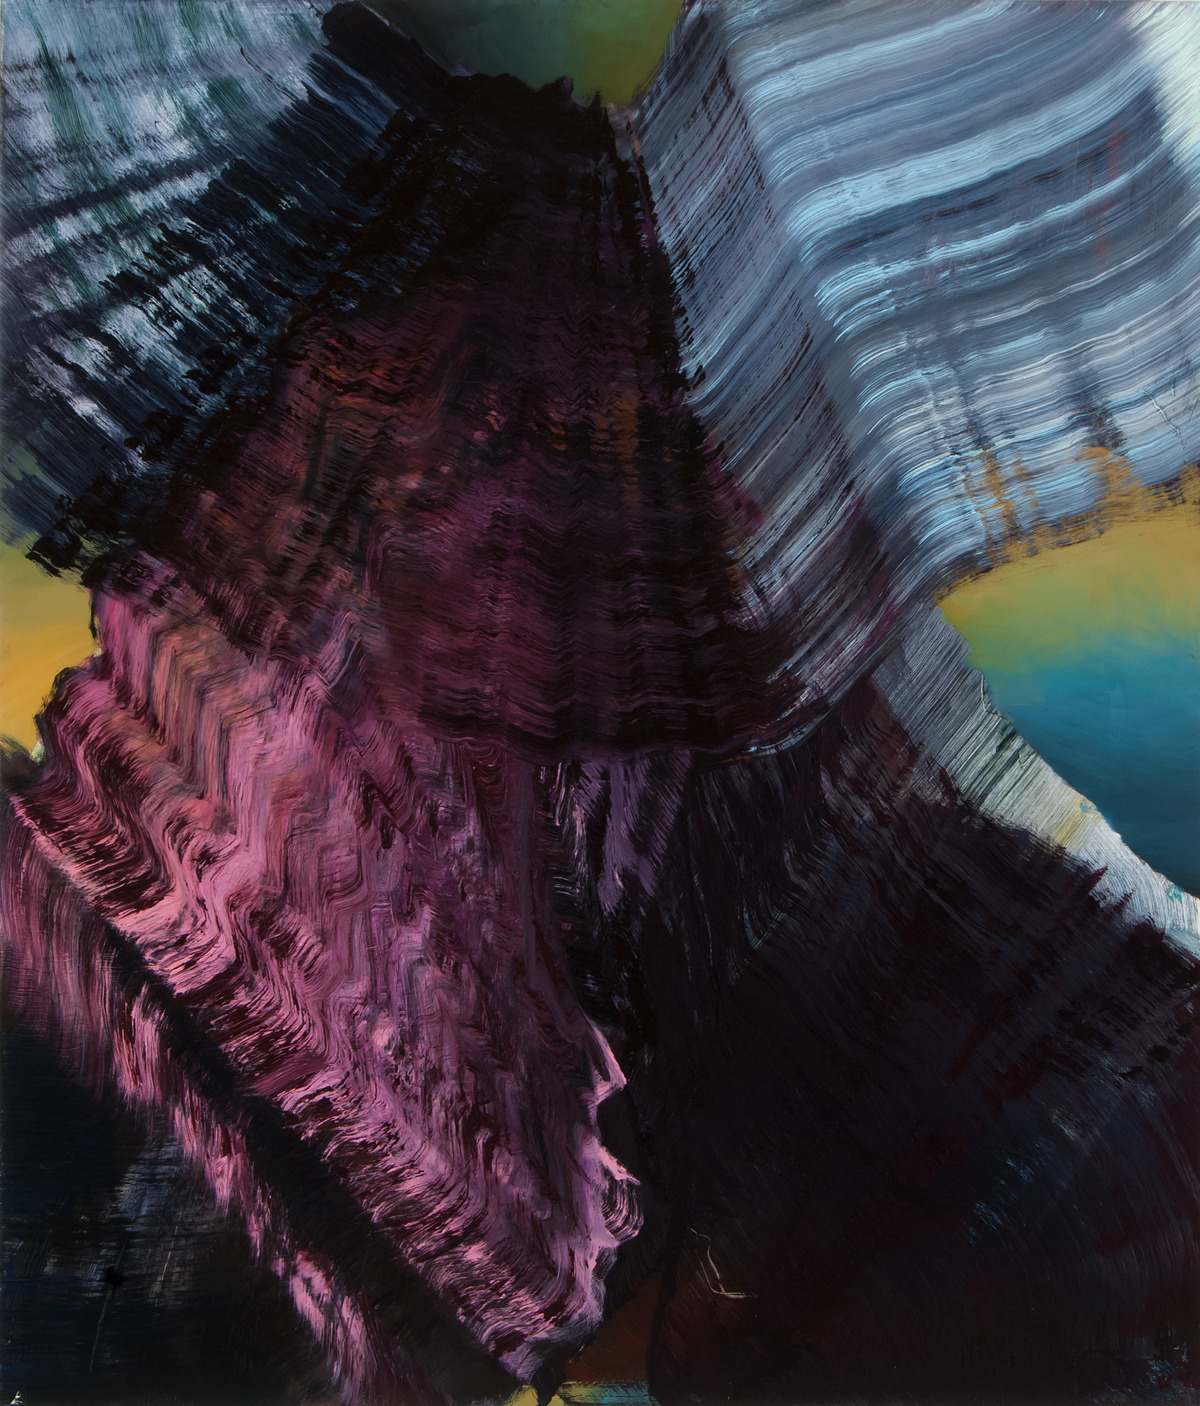 Jeremy Szopinski
X #1
Oil on canvas
70” x 60”
2014
http://jeremyszopinski.tumblr.com/